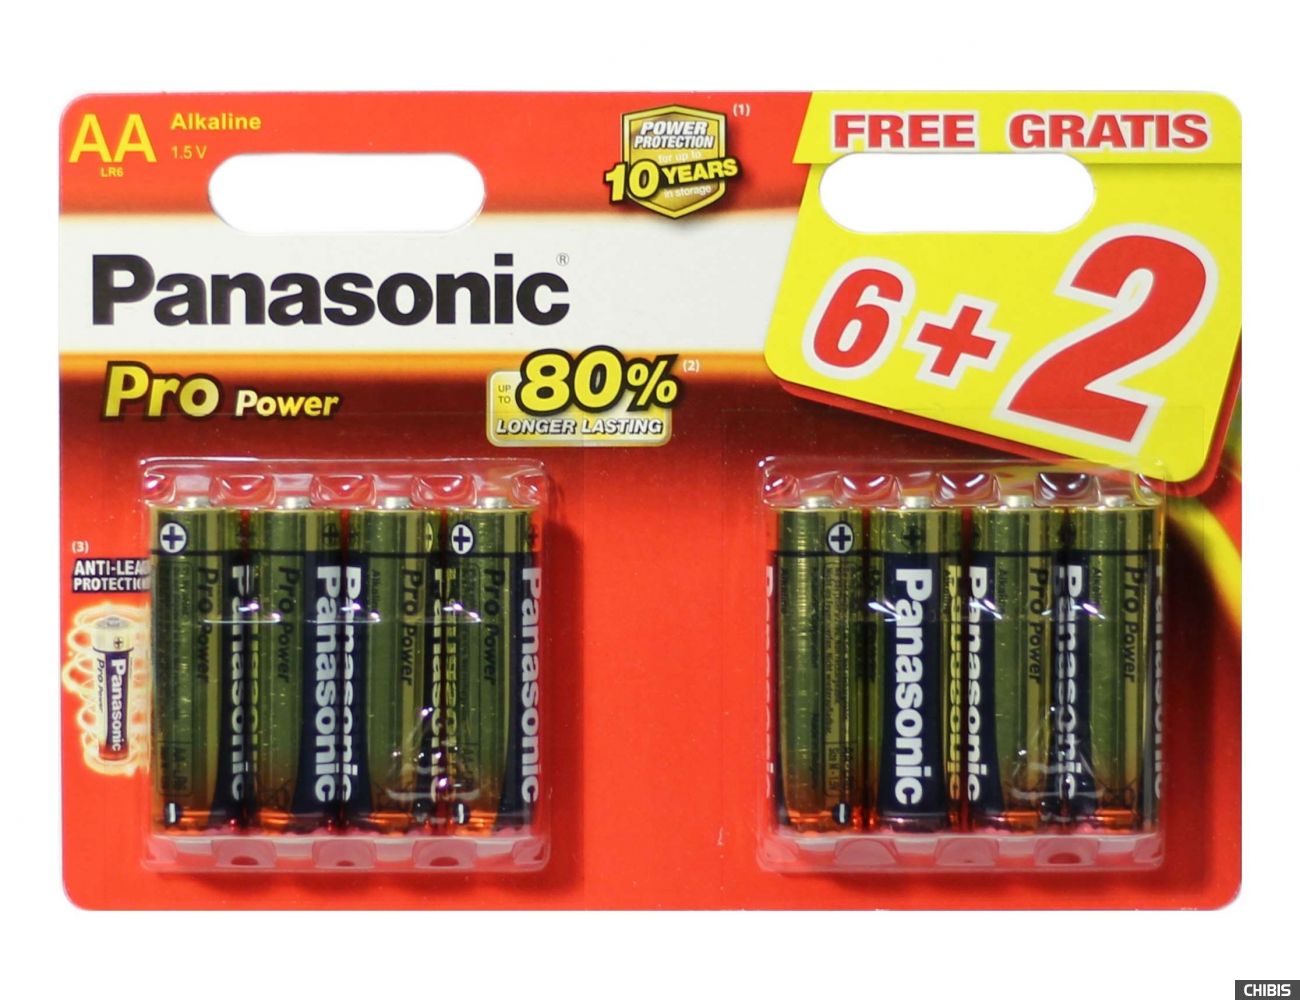 Батарейка АА Panasonic Pro Power Alkaline 1.5V LR6XEG/8B2F 6+2 бесплатно